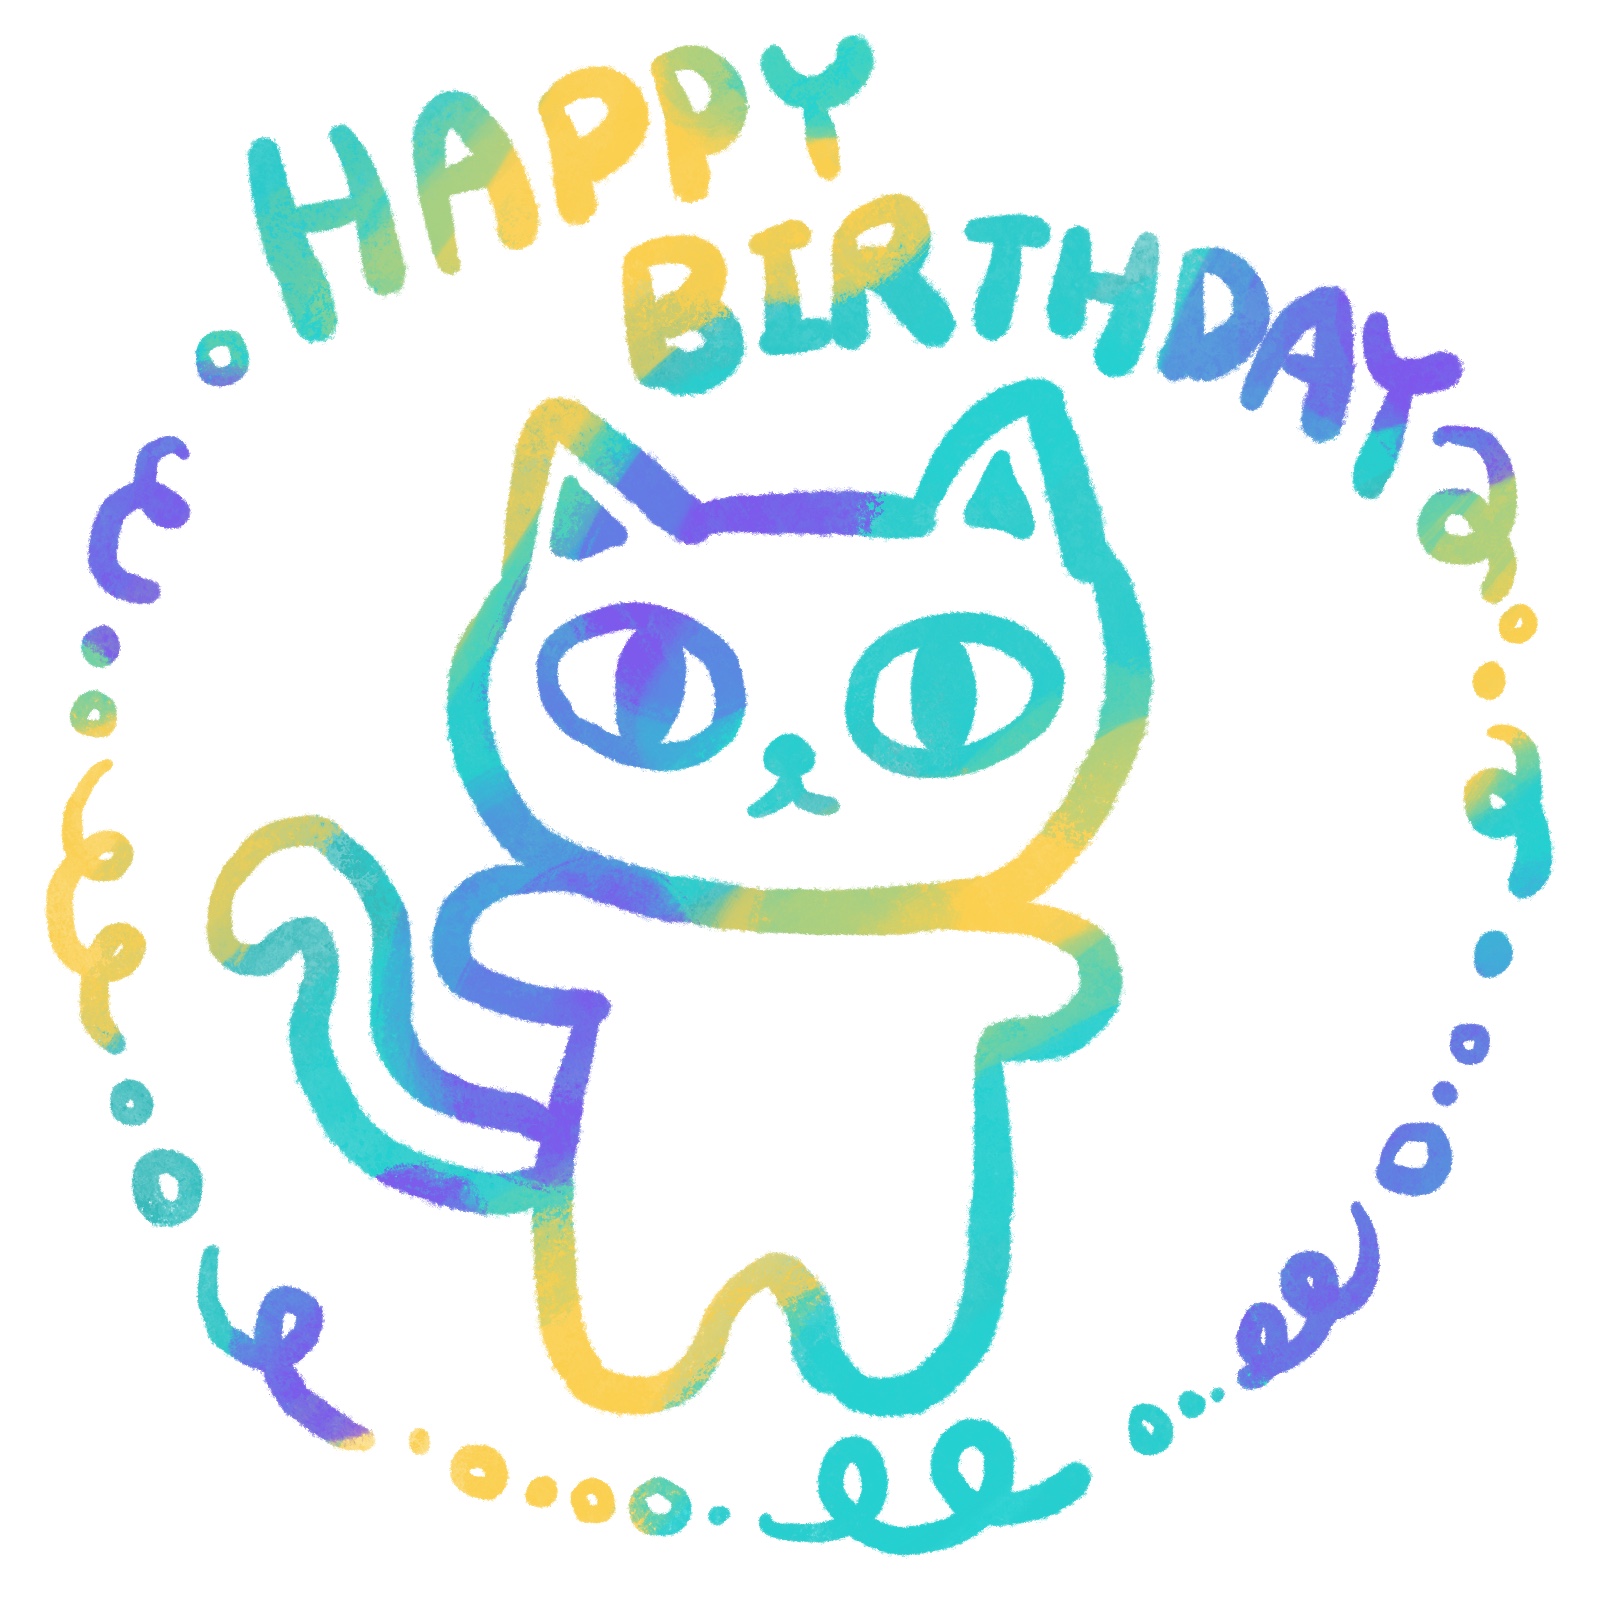 HAPPY BIRTHDAYの文字と猫のイラスト